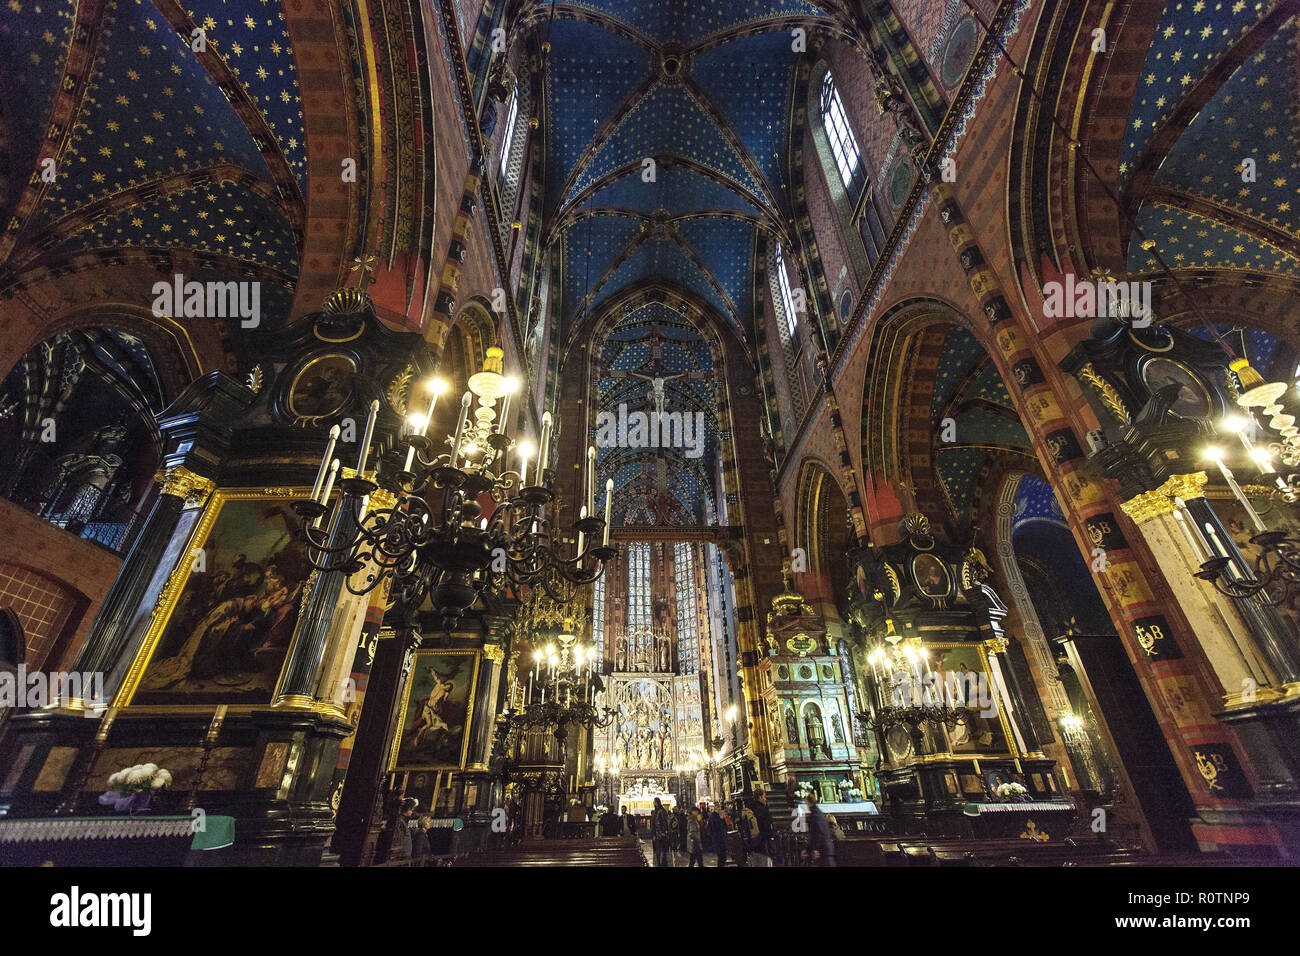 Central nave of St Mary's Basilica, Krakow, Poland    Photo © Federico Meneghetti/Sintesi/Alamy Stock Photo Stock Photo